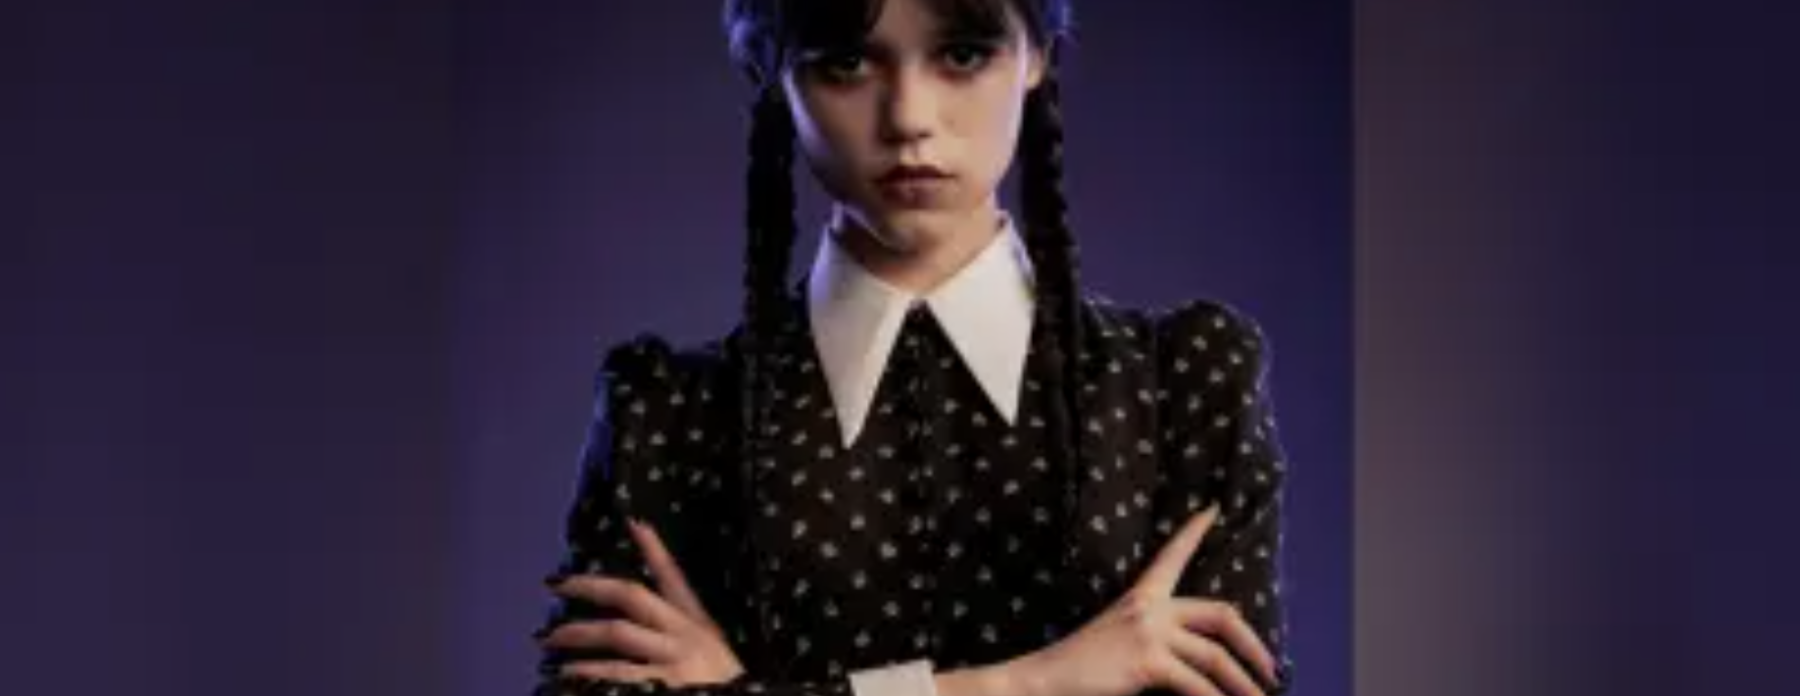 Jenna Ortega dressed as Wednesday Addams